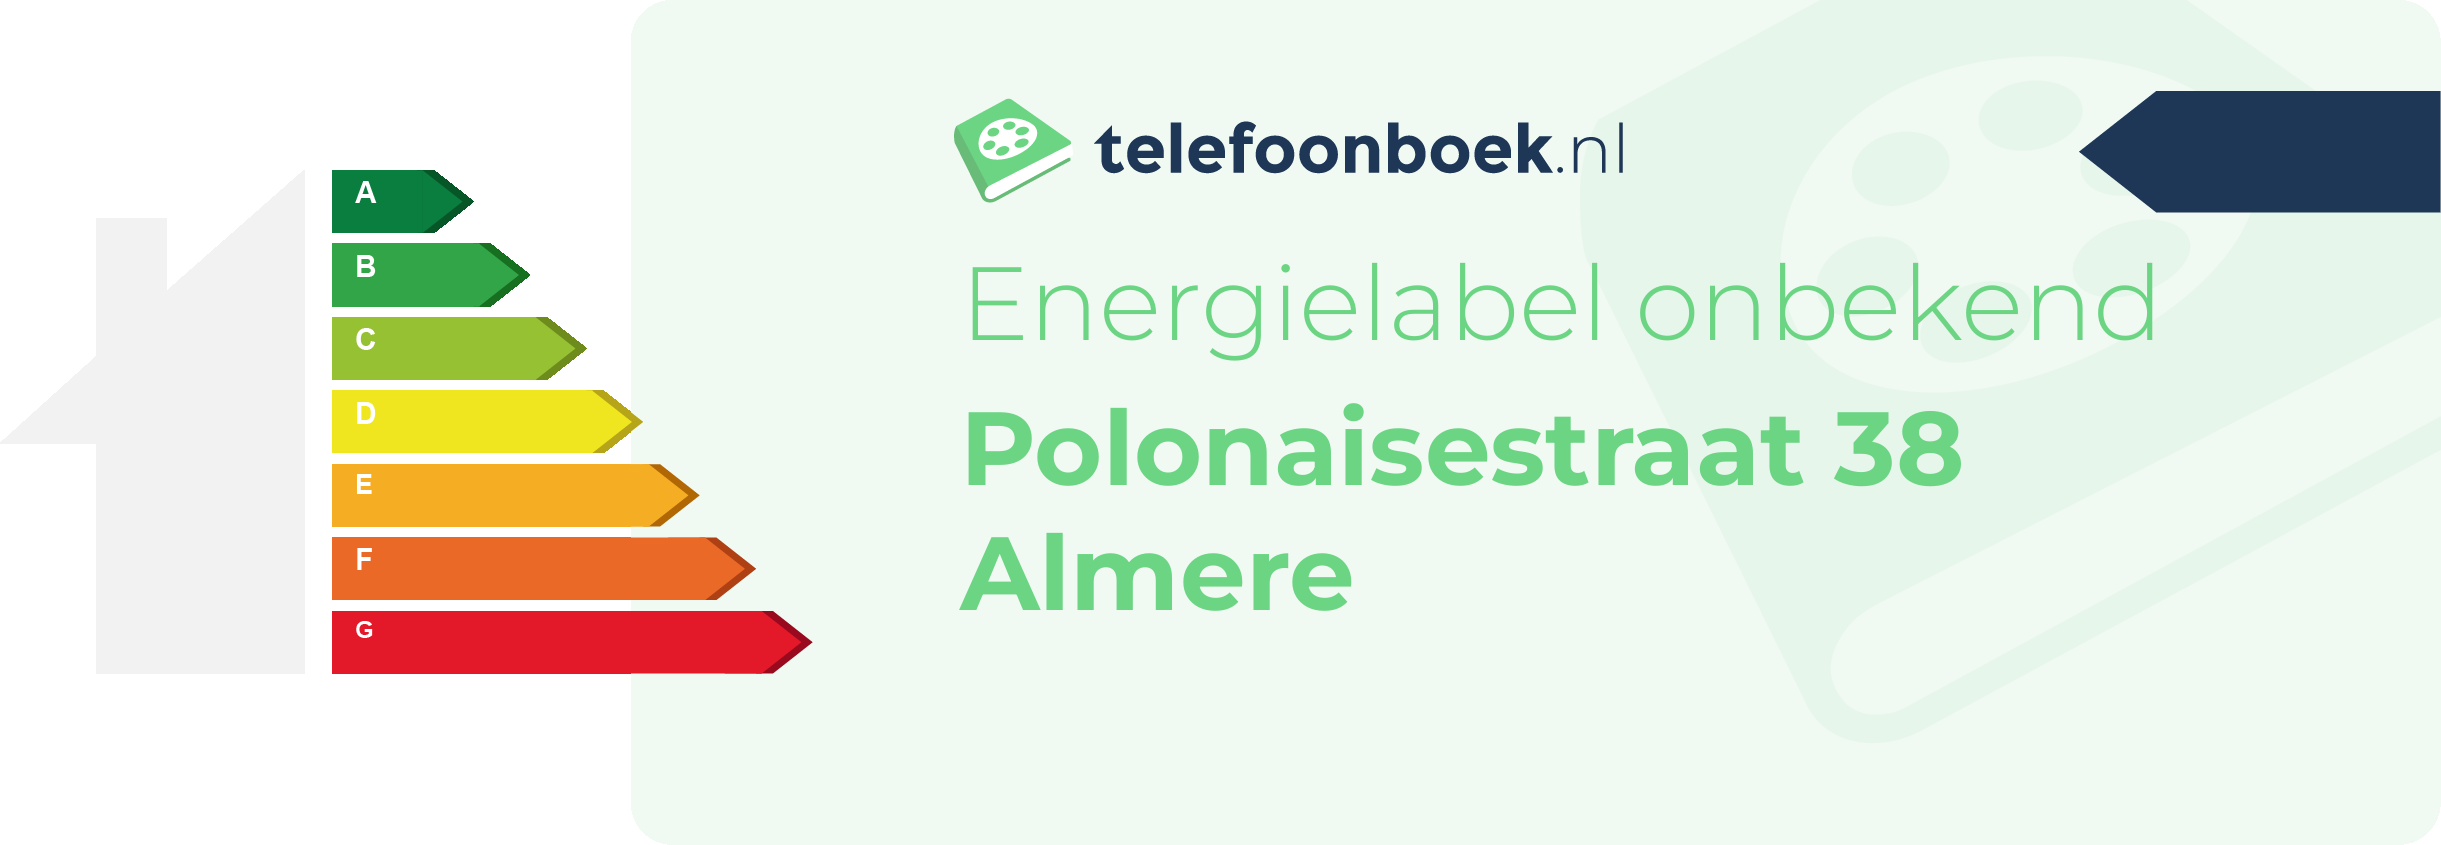 Energielabel Polonaisestraat 38 Almere